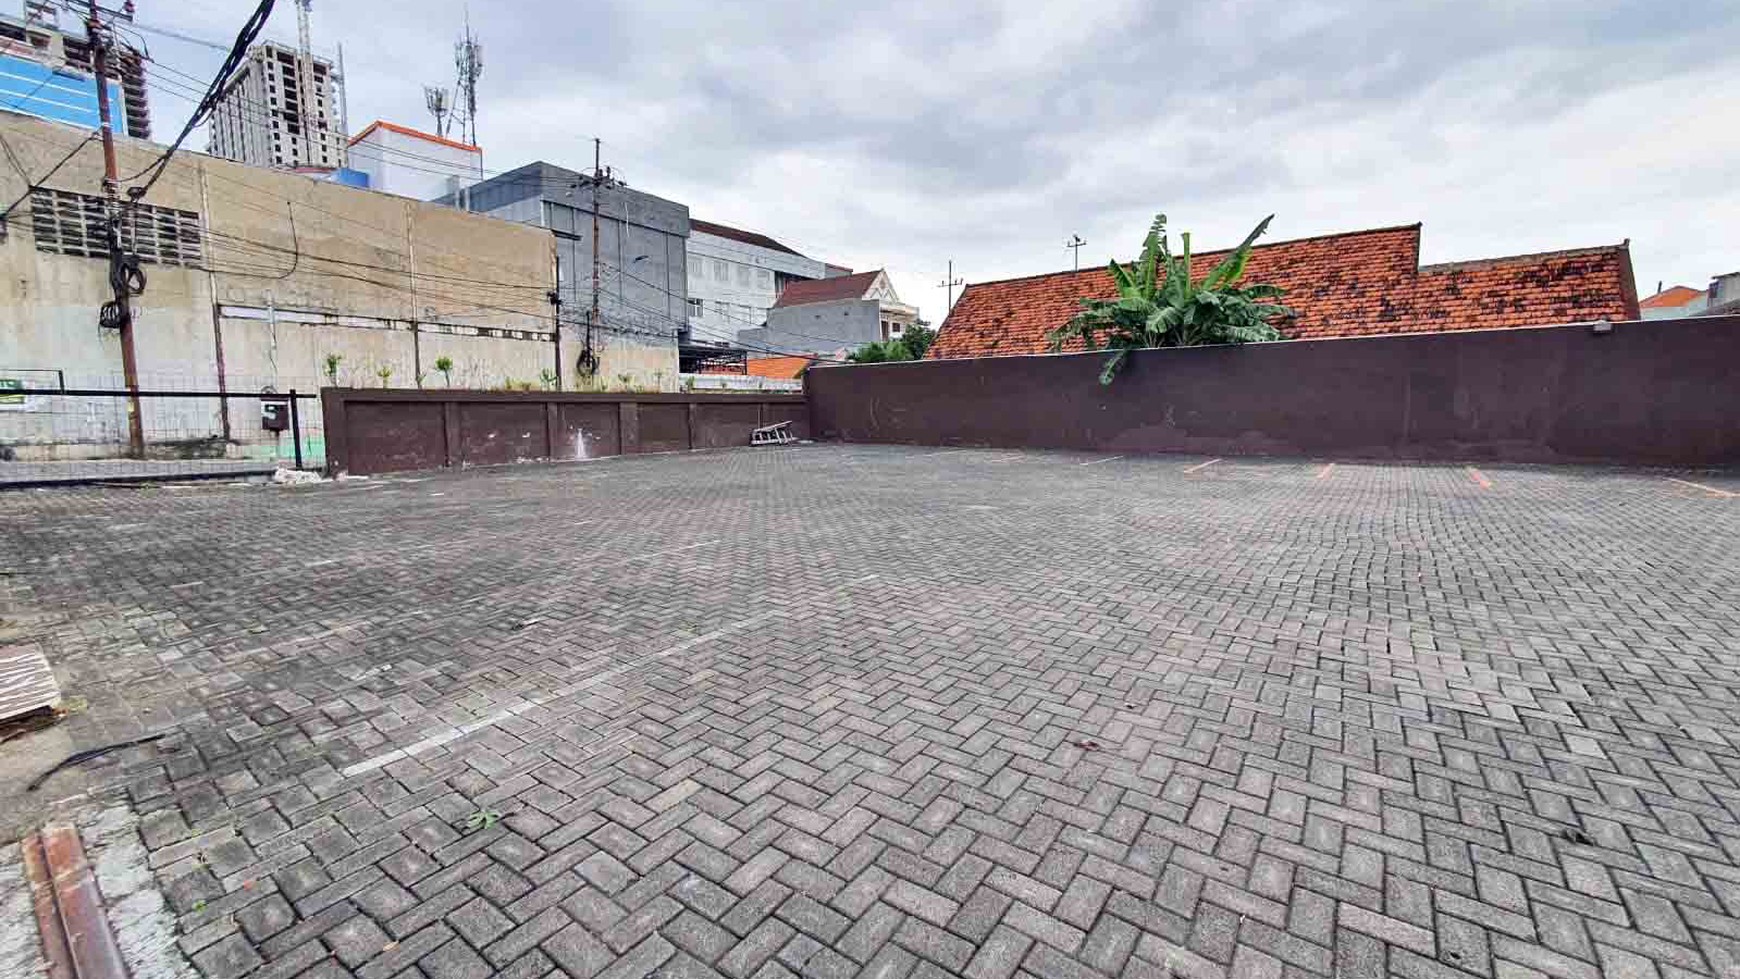 Rumah di Raya A. Yani Surabaya, Nol Jalan Raya, Cocok untuk usaha apapun, Parkir sangat luas !!!